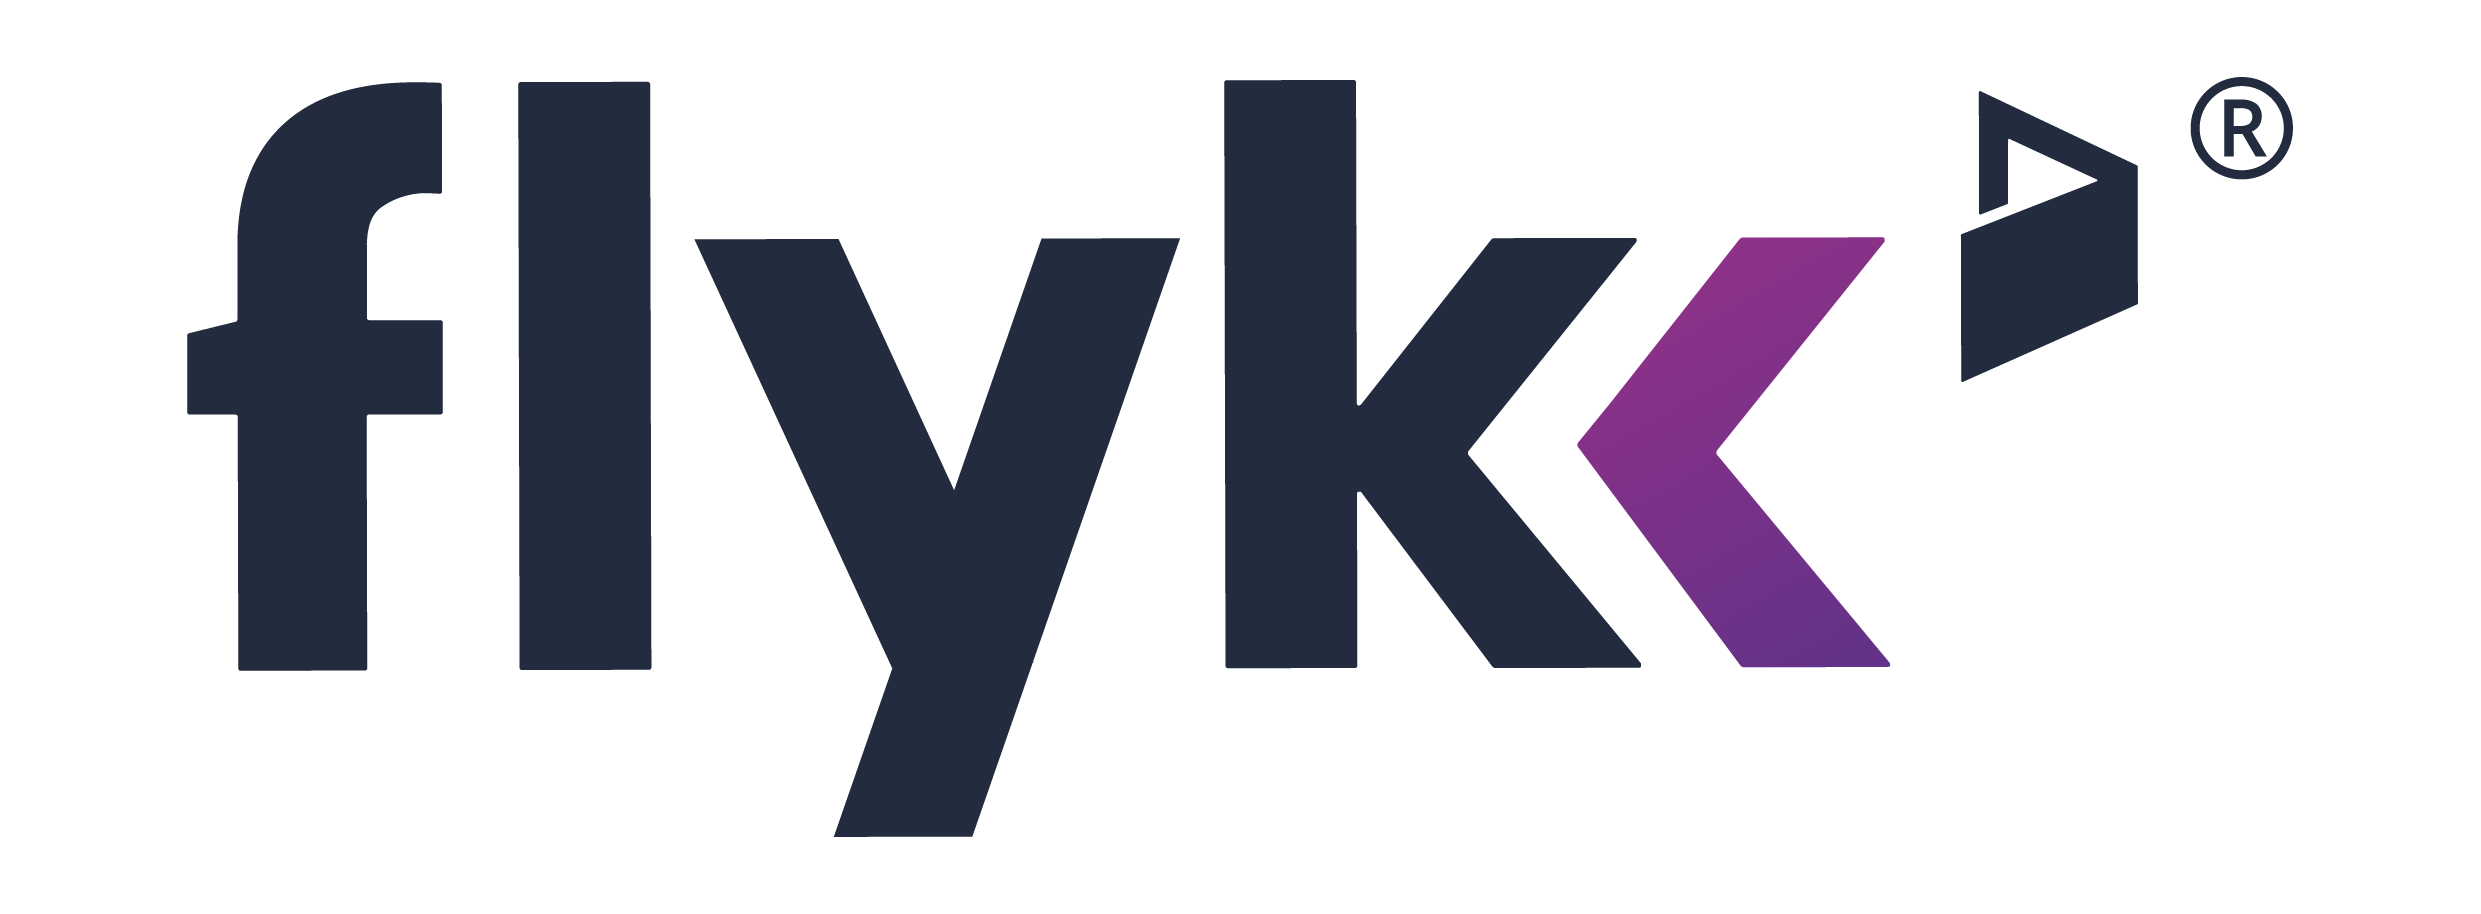 Flykk: Revolutionary Payment System for Online Casinos